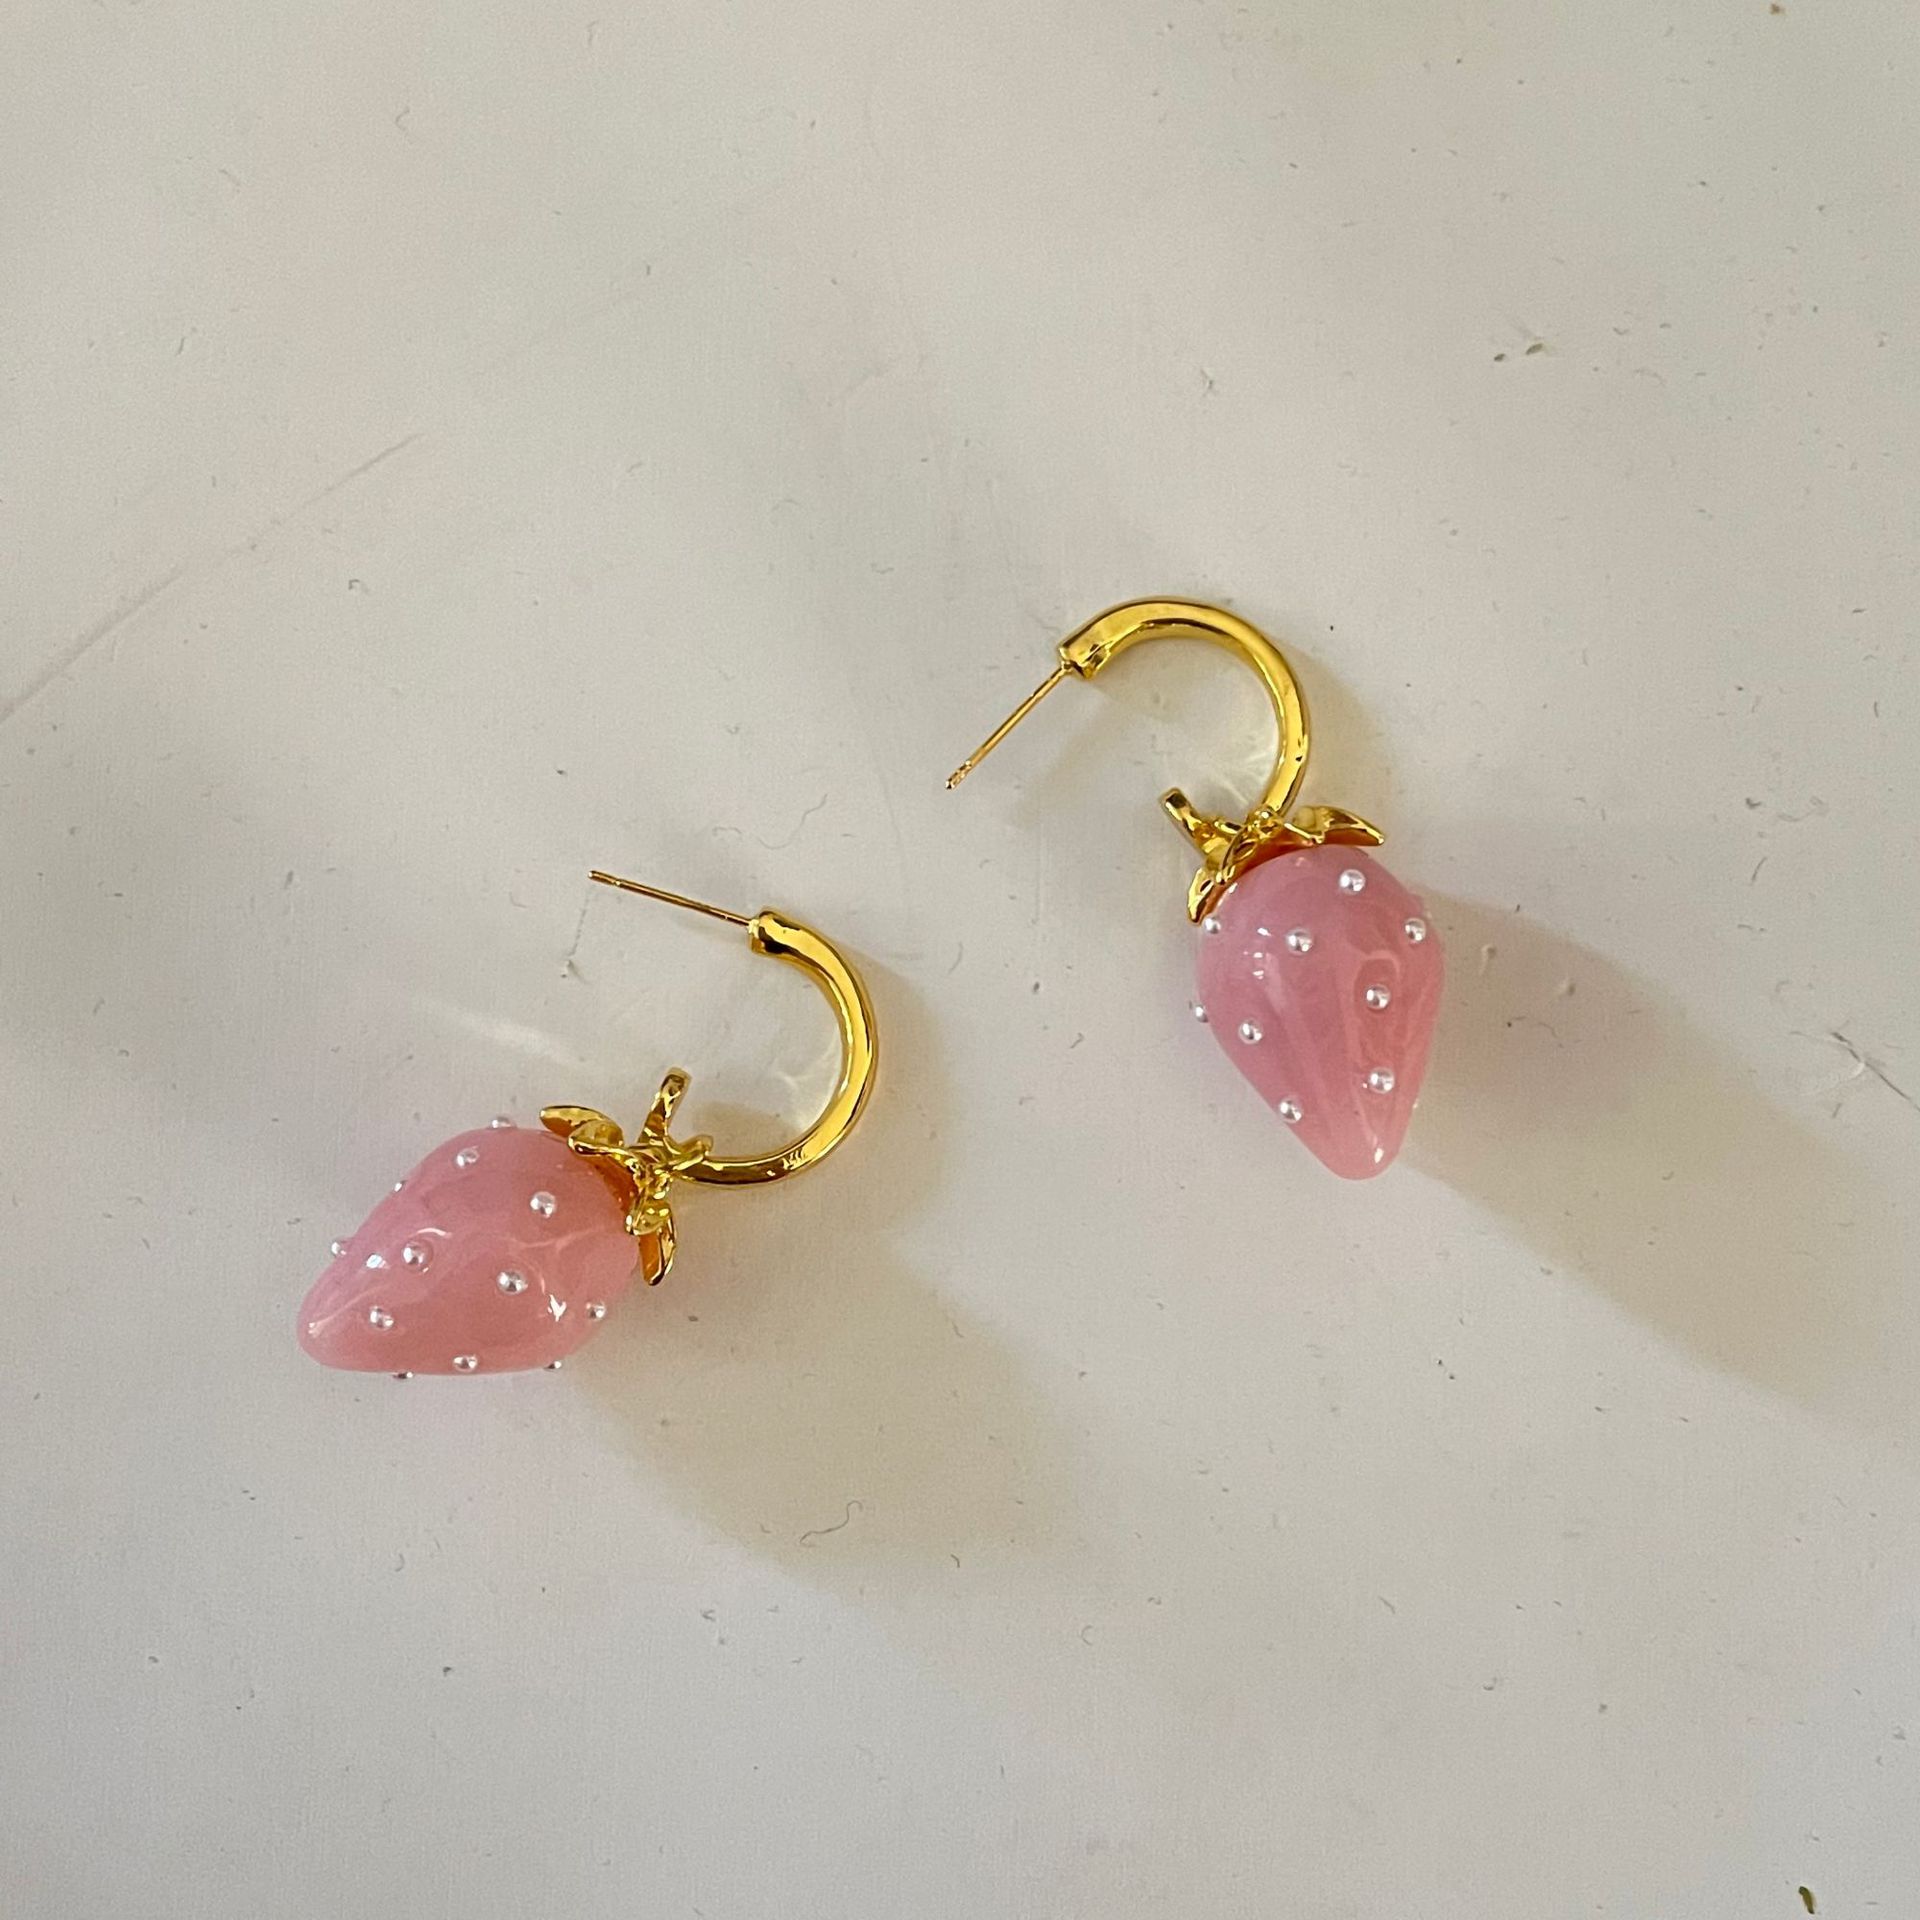 1:Strawberry EQ (Stud earrings)